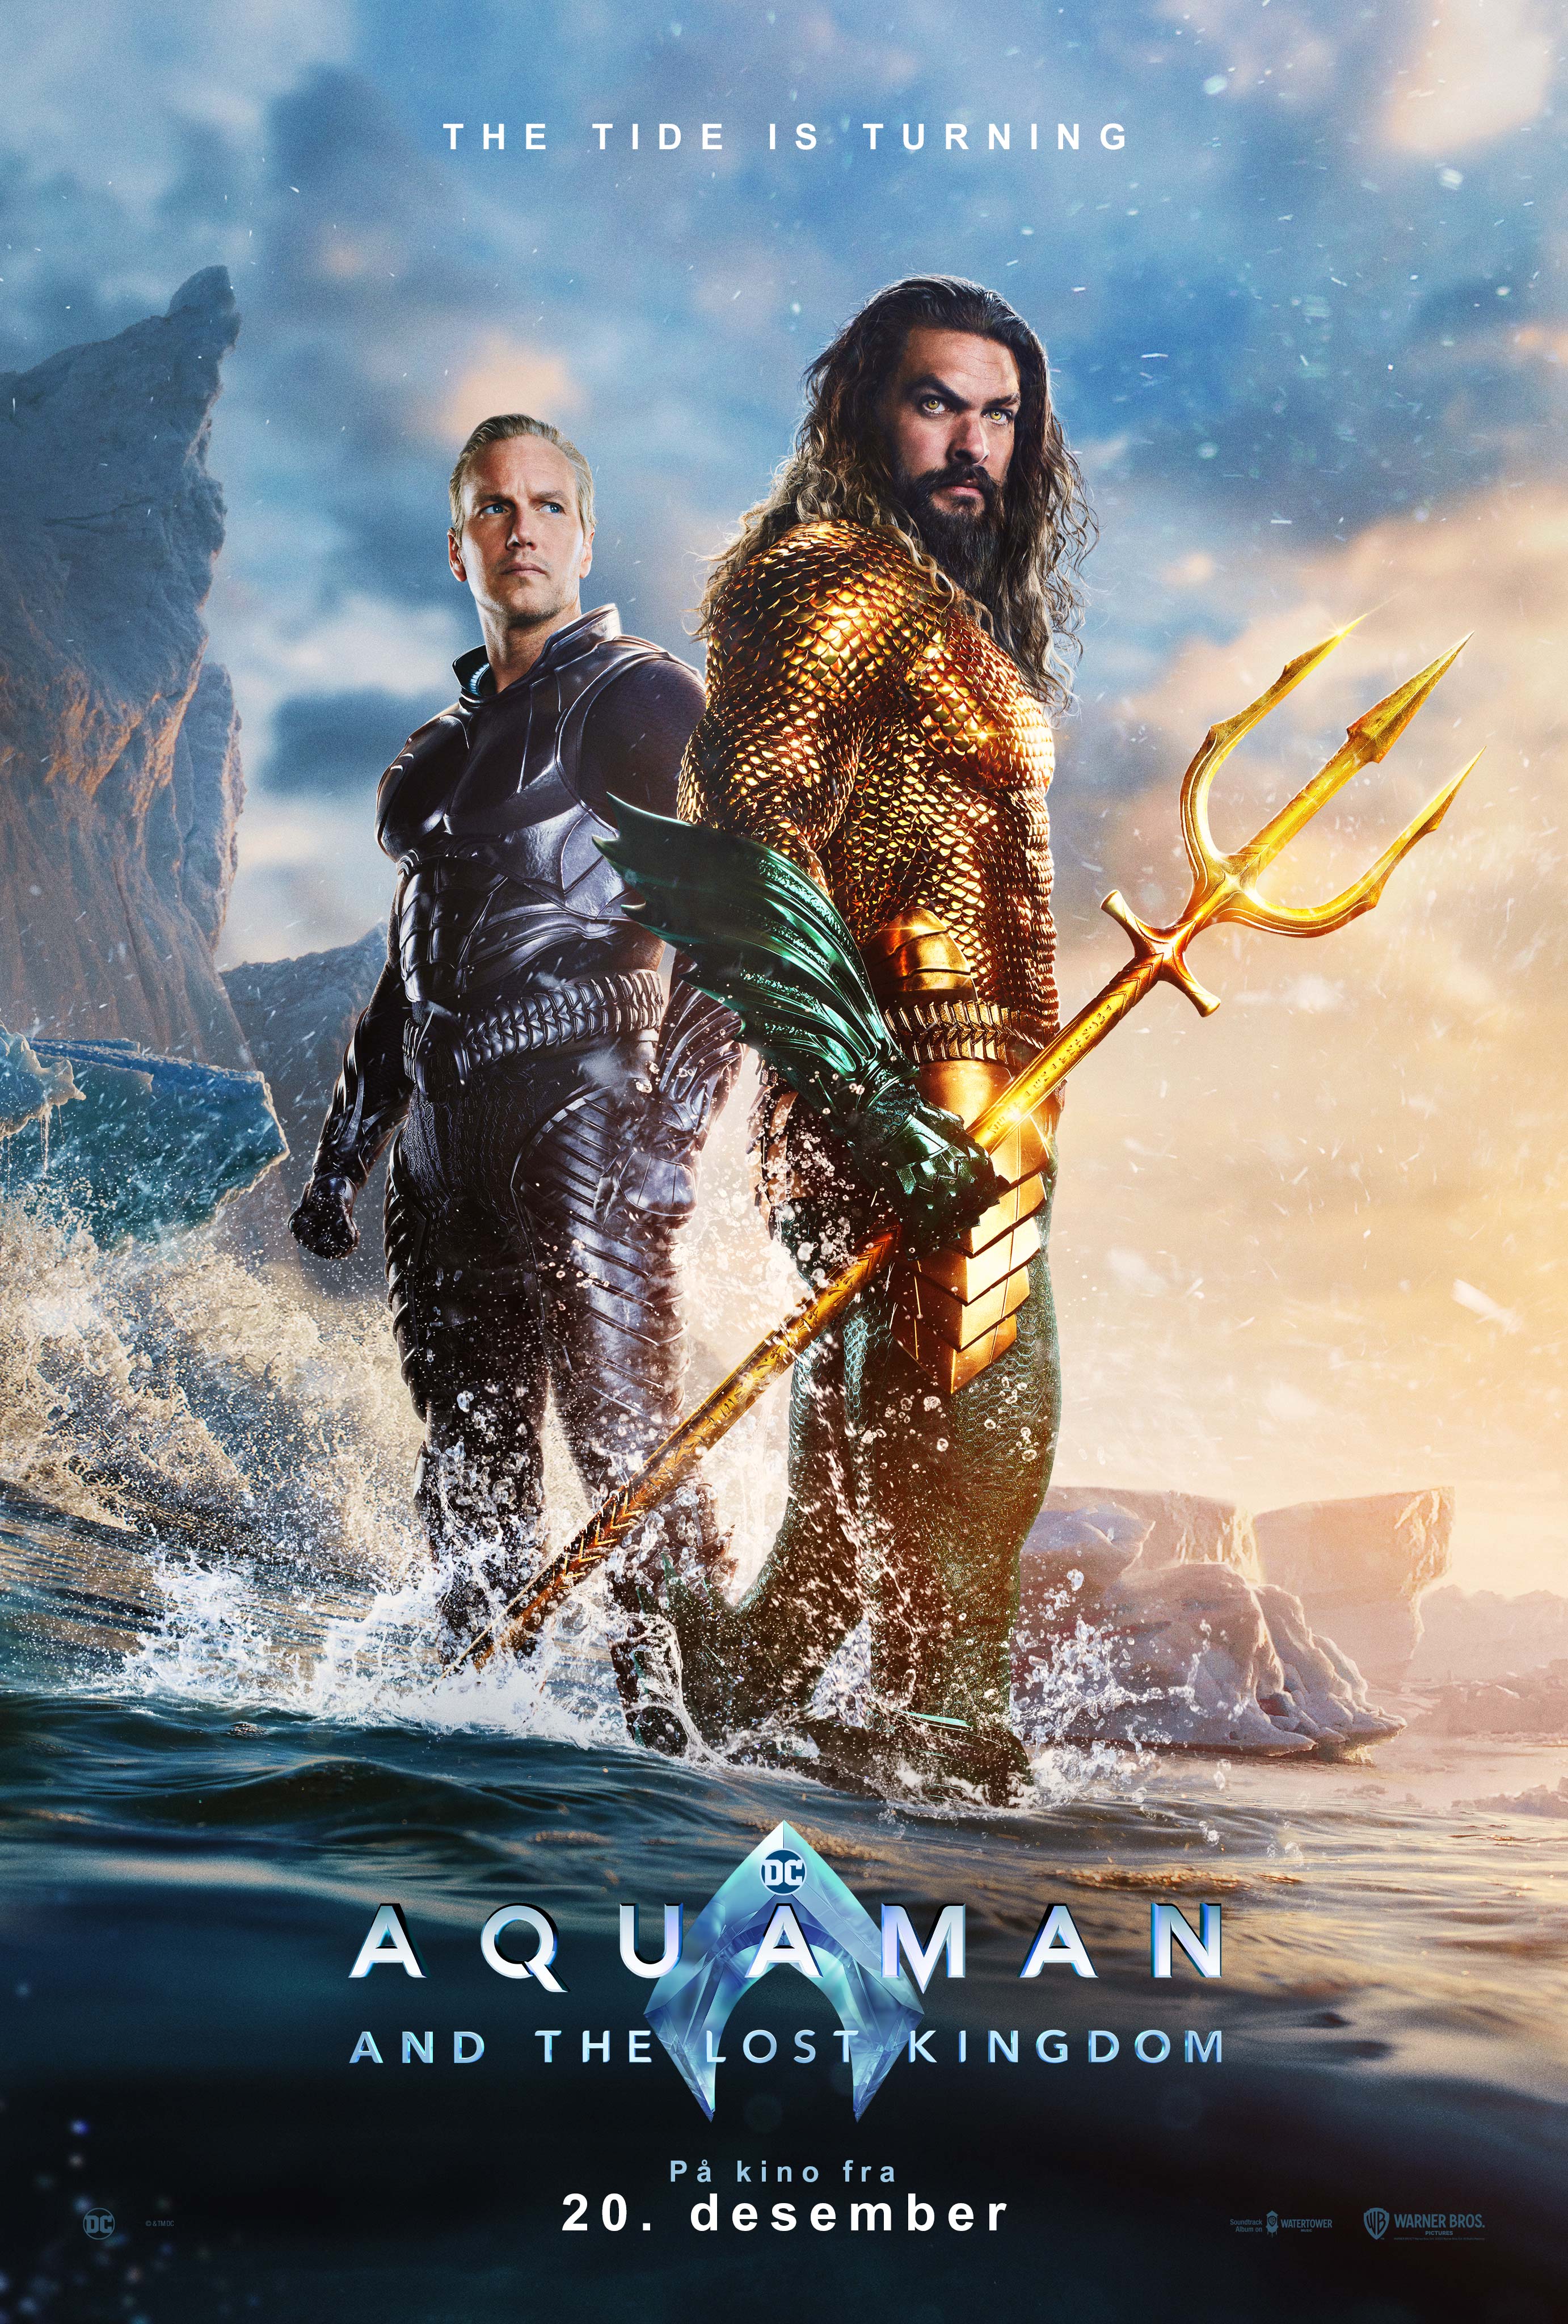 Kinoplakat for Aquaman and the Lost Kingdom